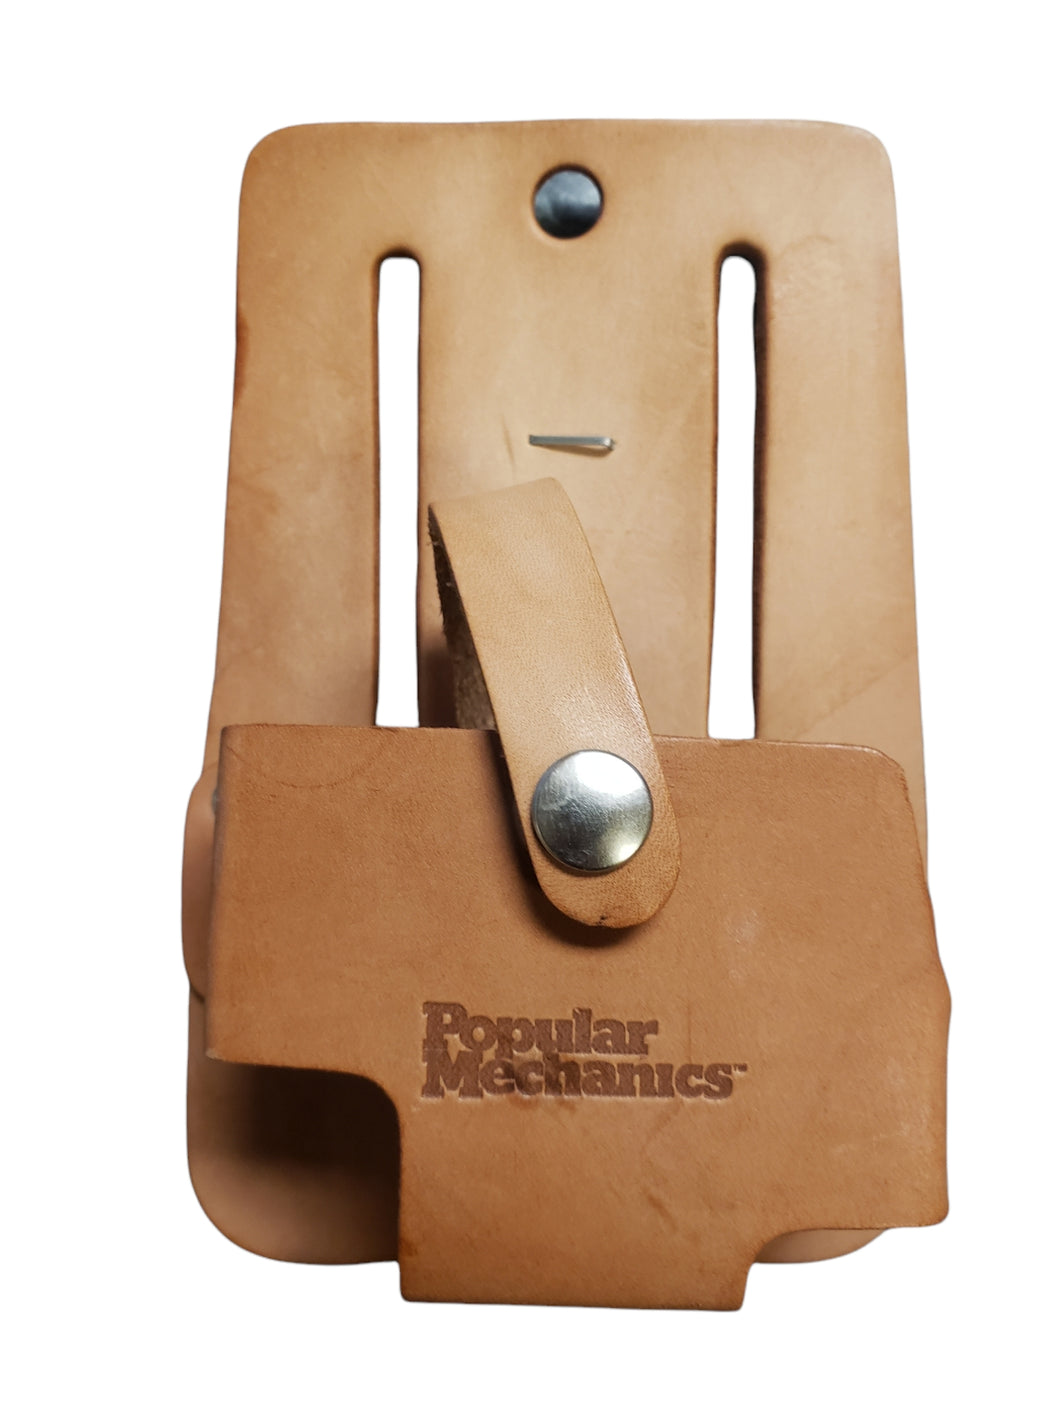 Popular Mechanics - Genuine Leather Tool Holder - FreemanLiquidators - [product_description]